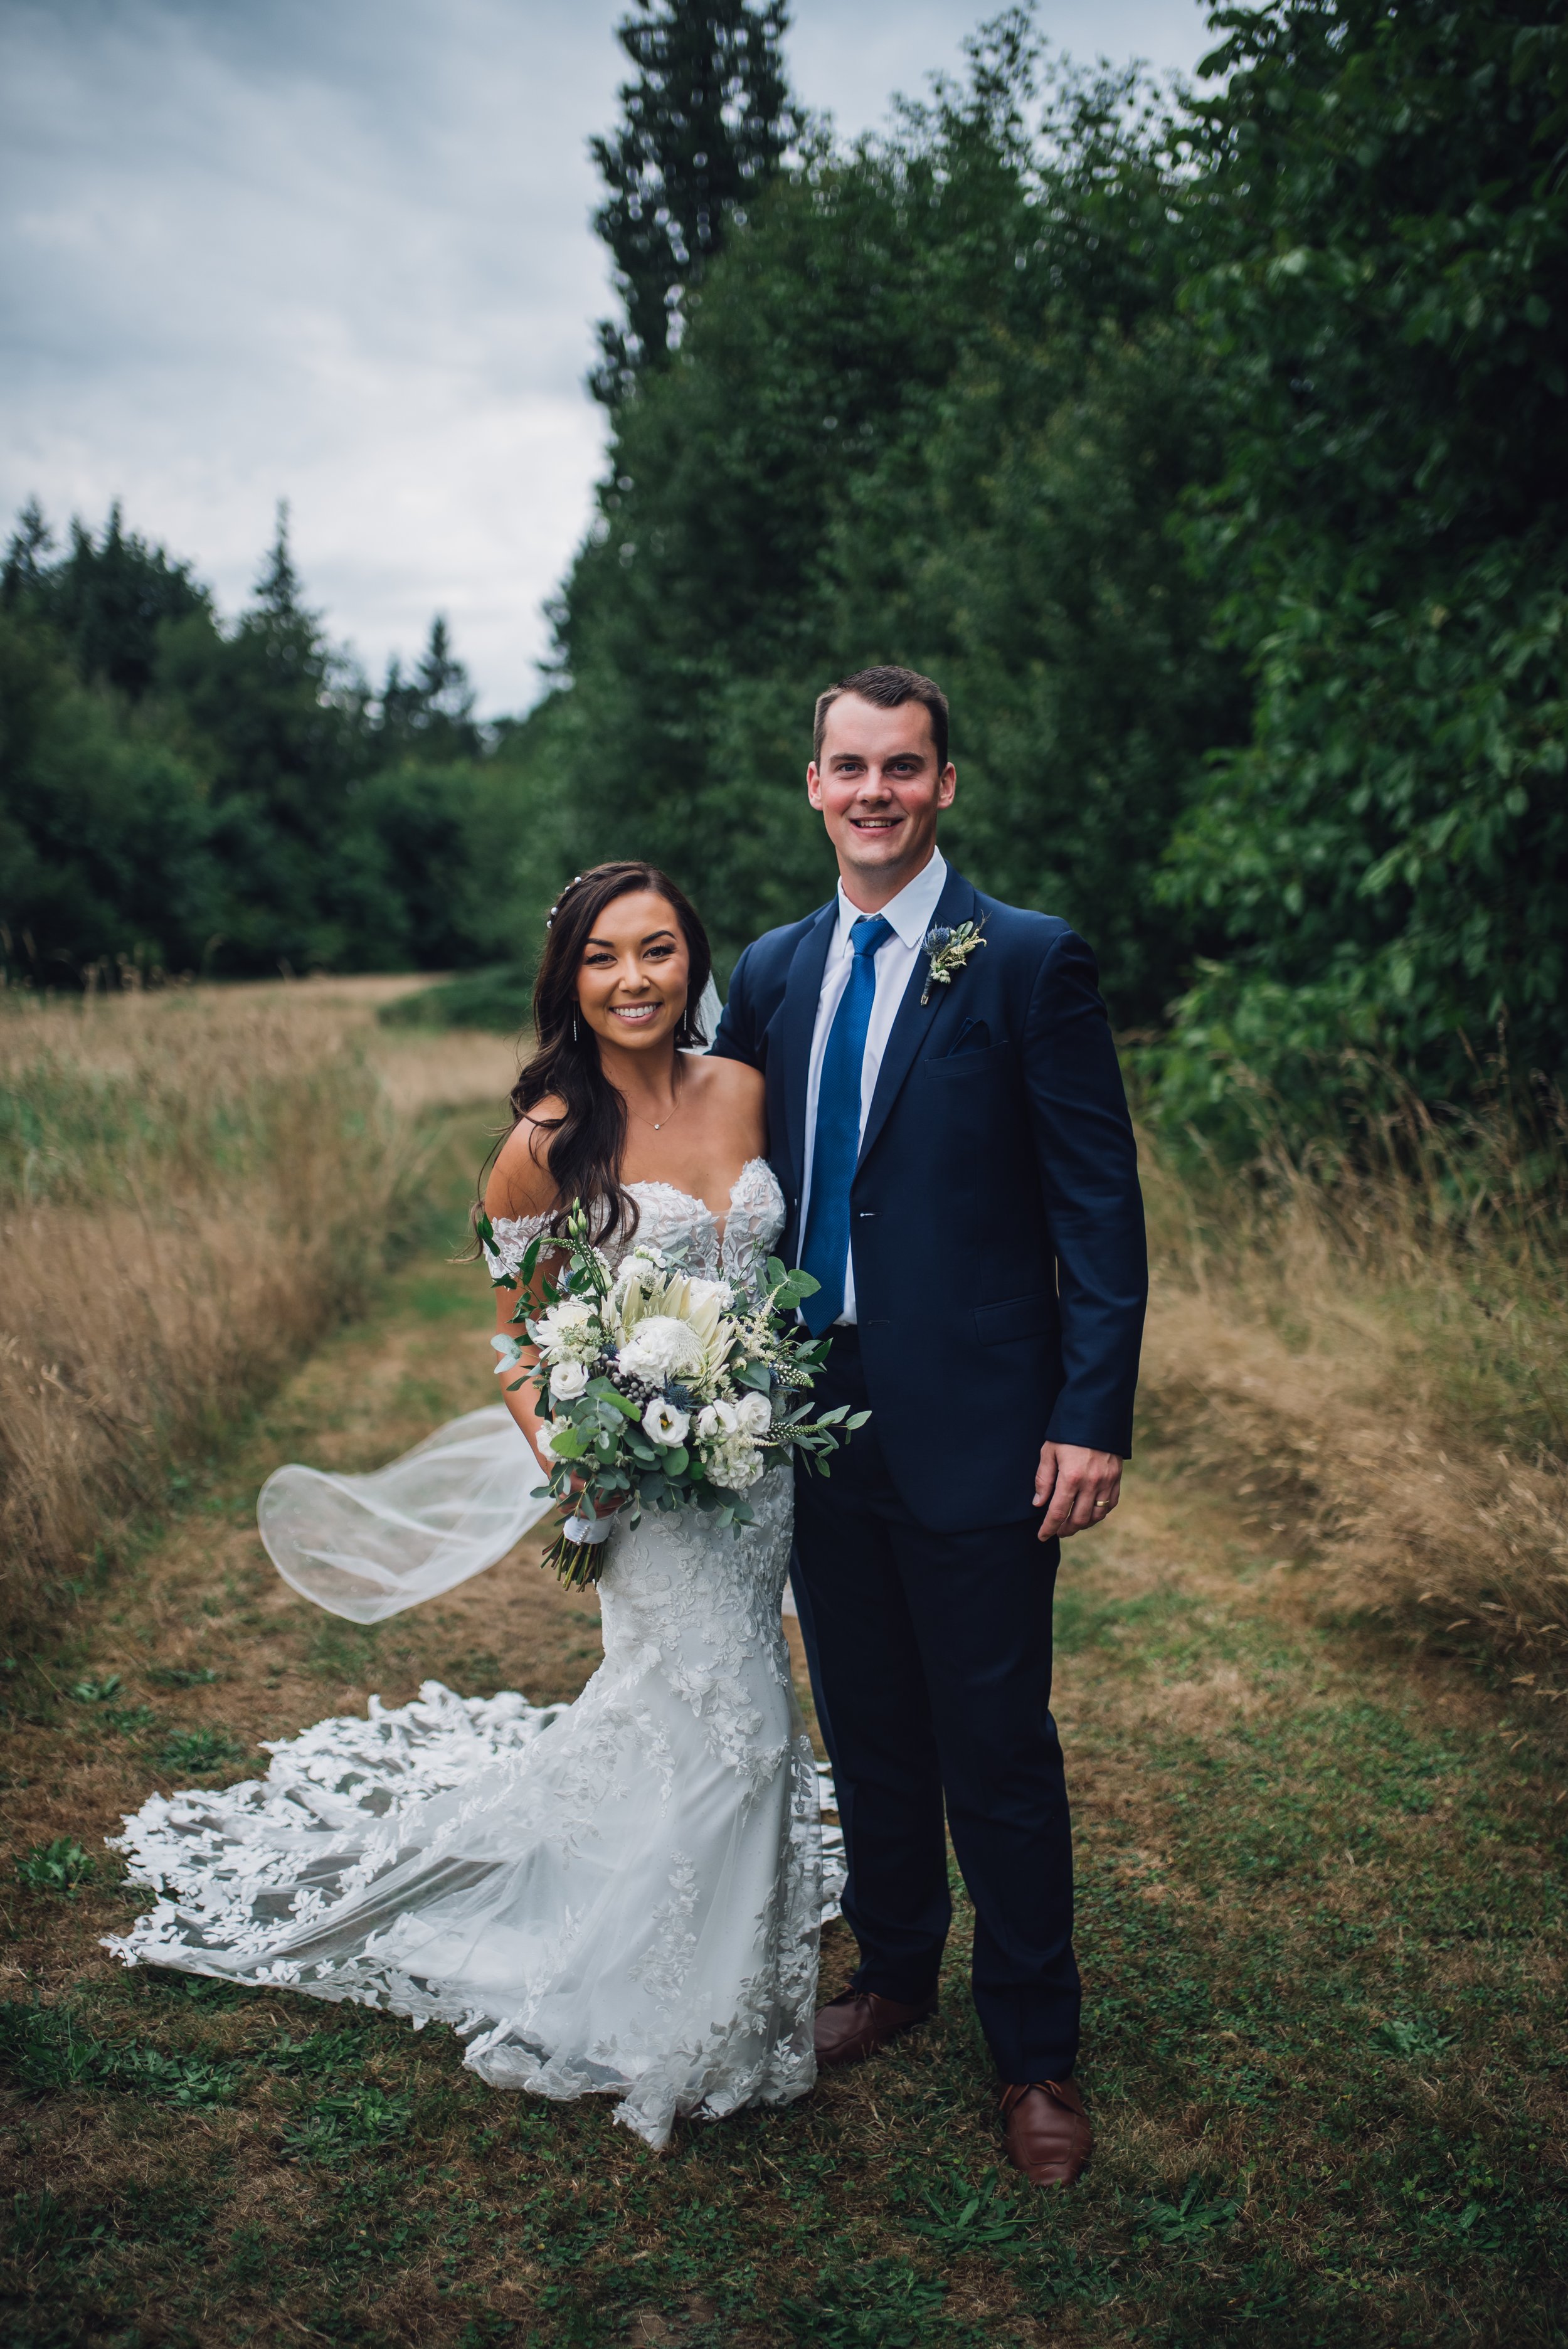 Shannon & Matt Wedding - August 21, 2021-0726.jpg